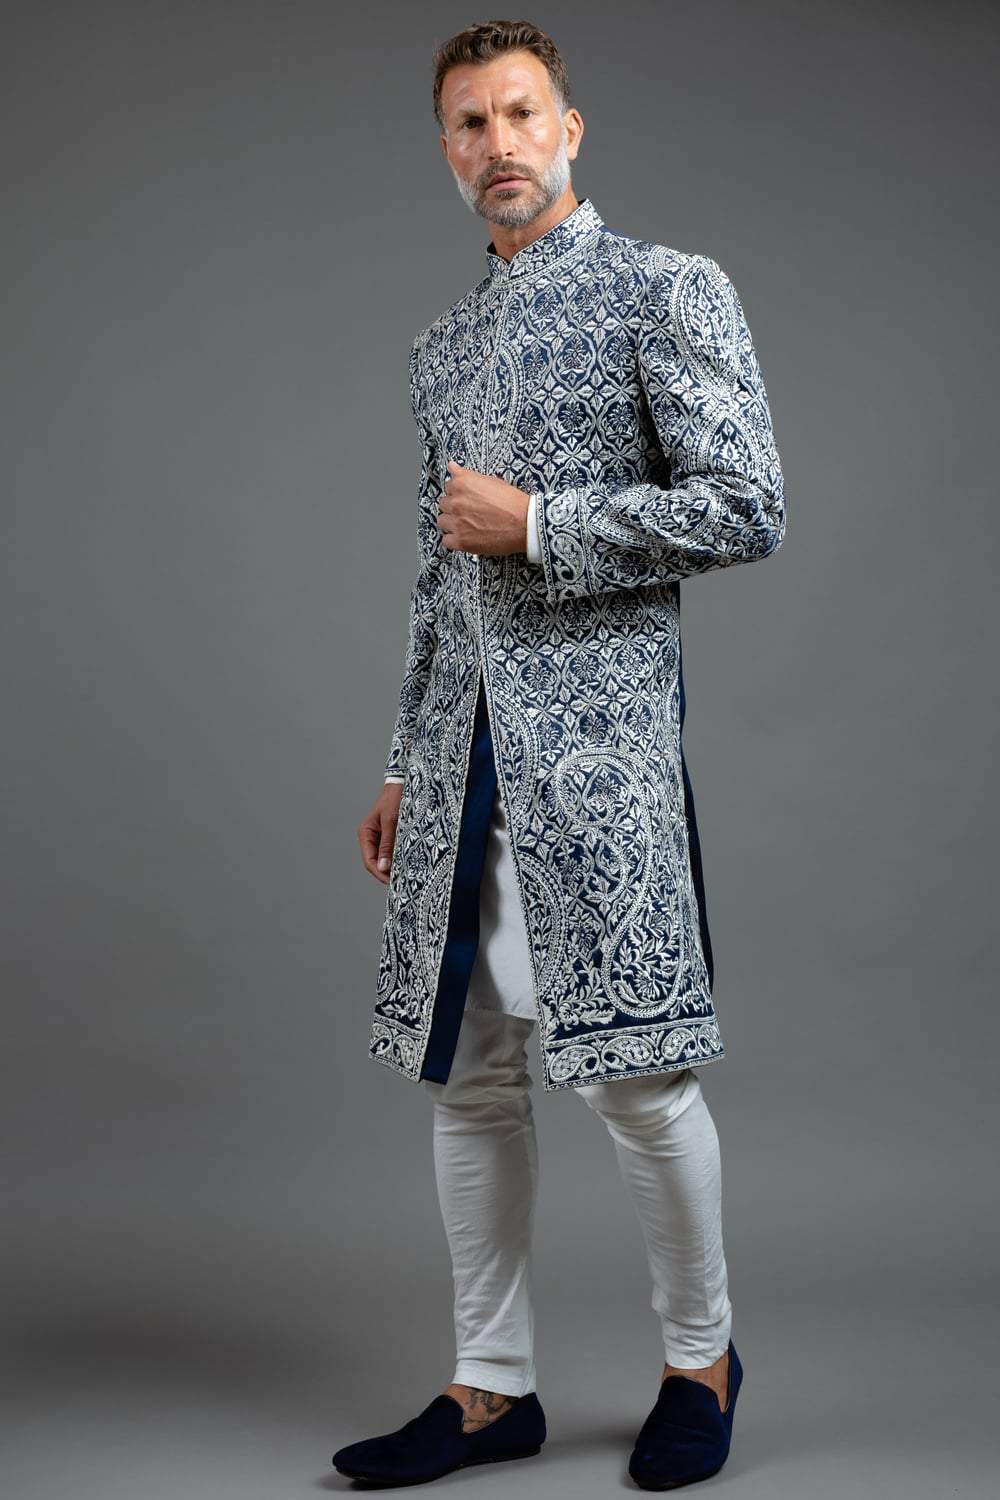 Blue And White Embroidered Sherwani